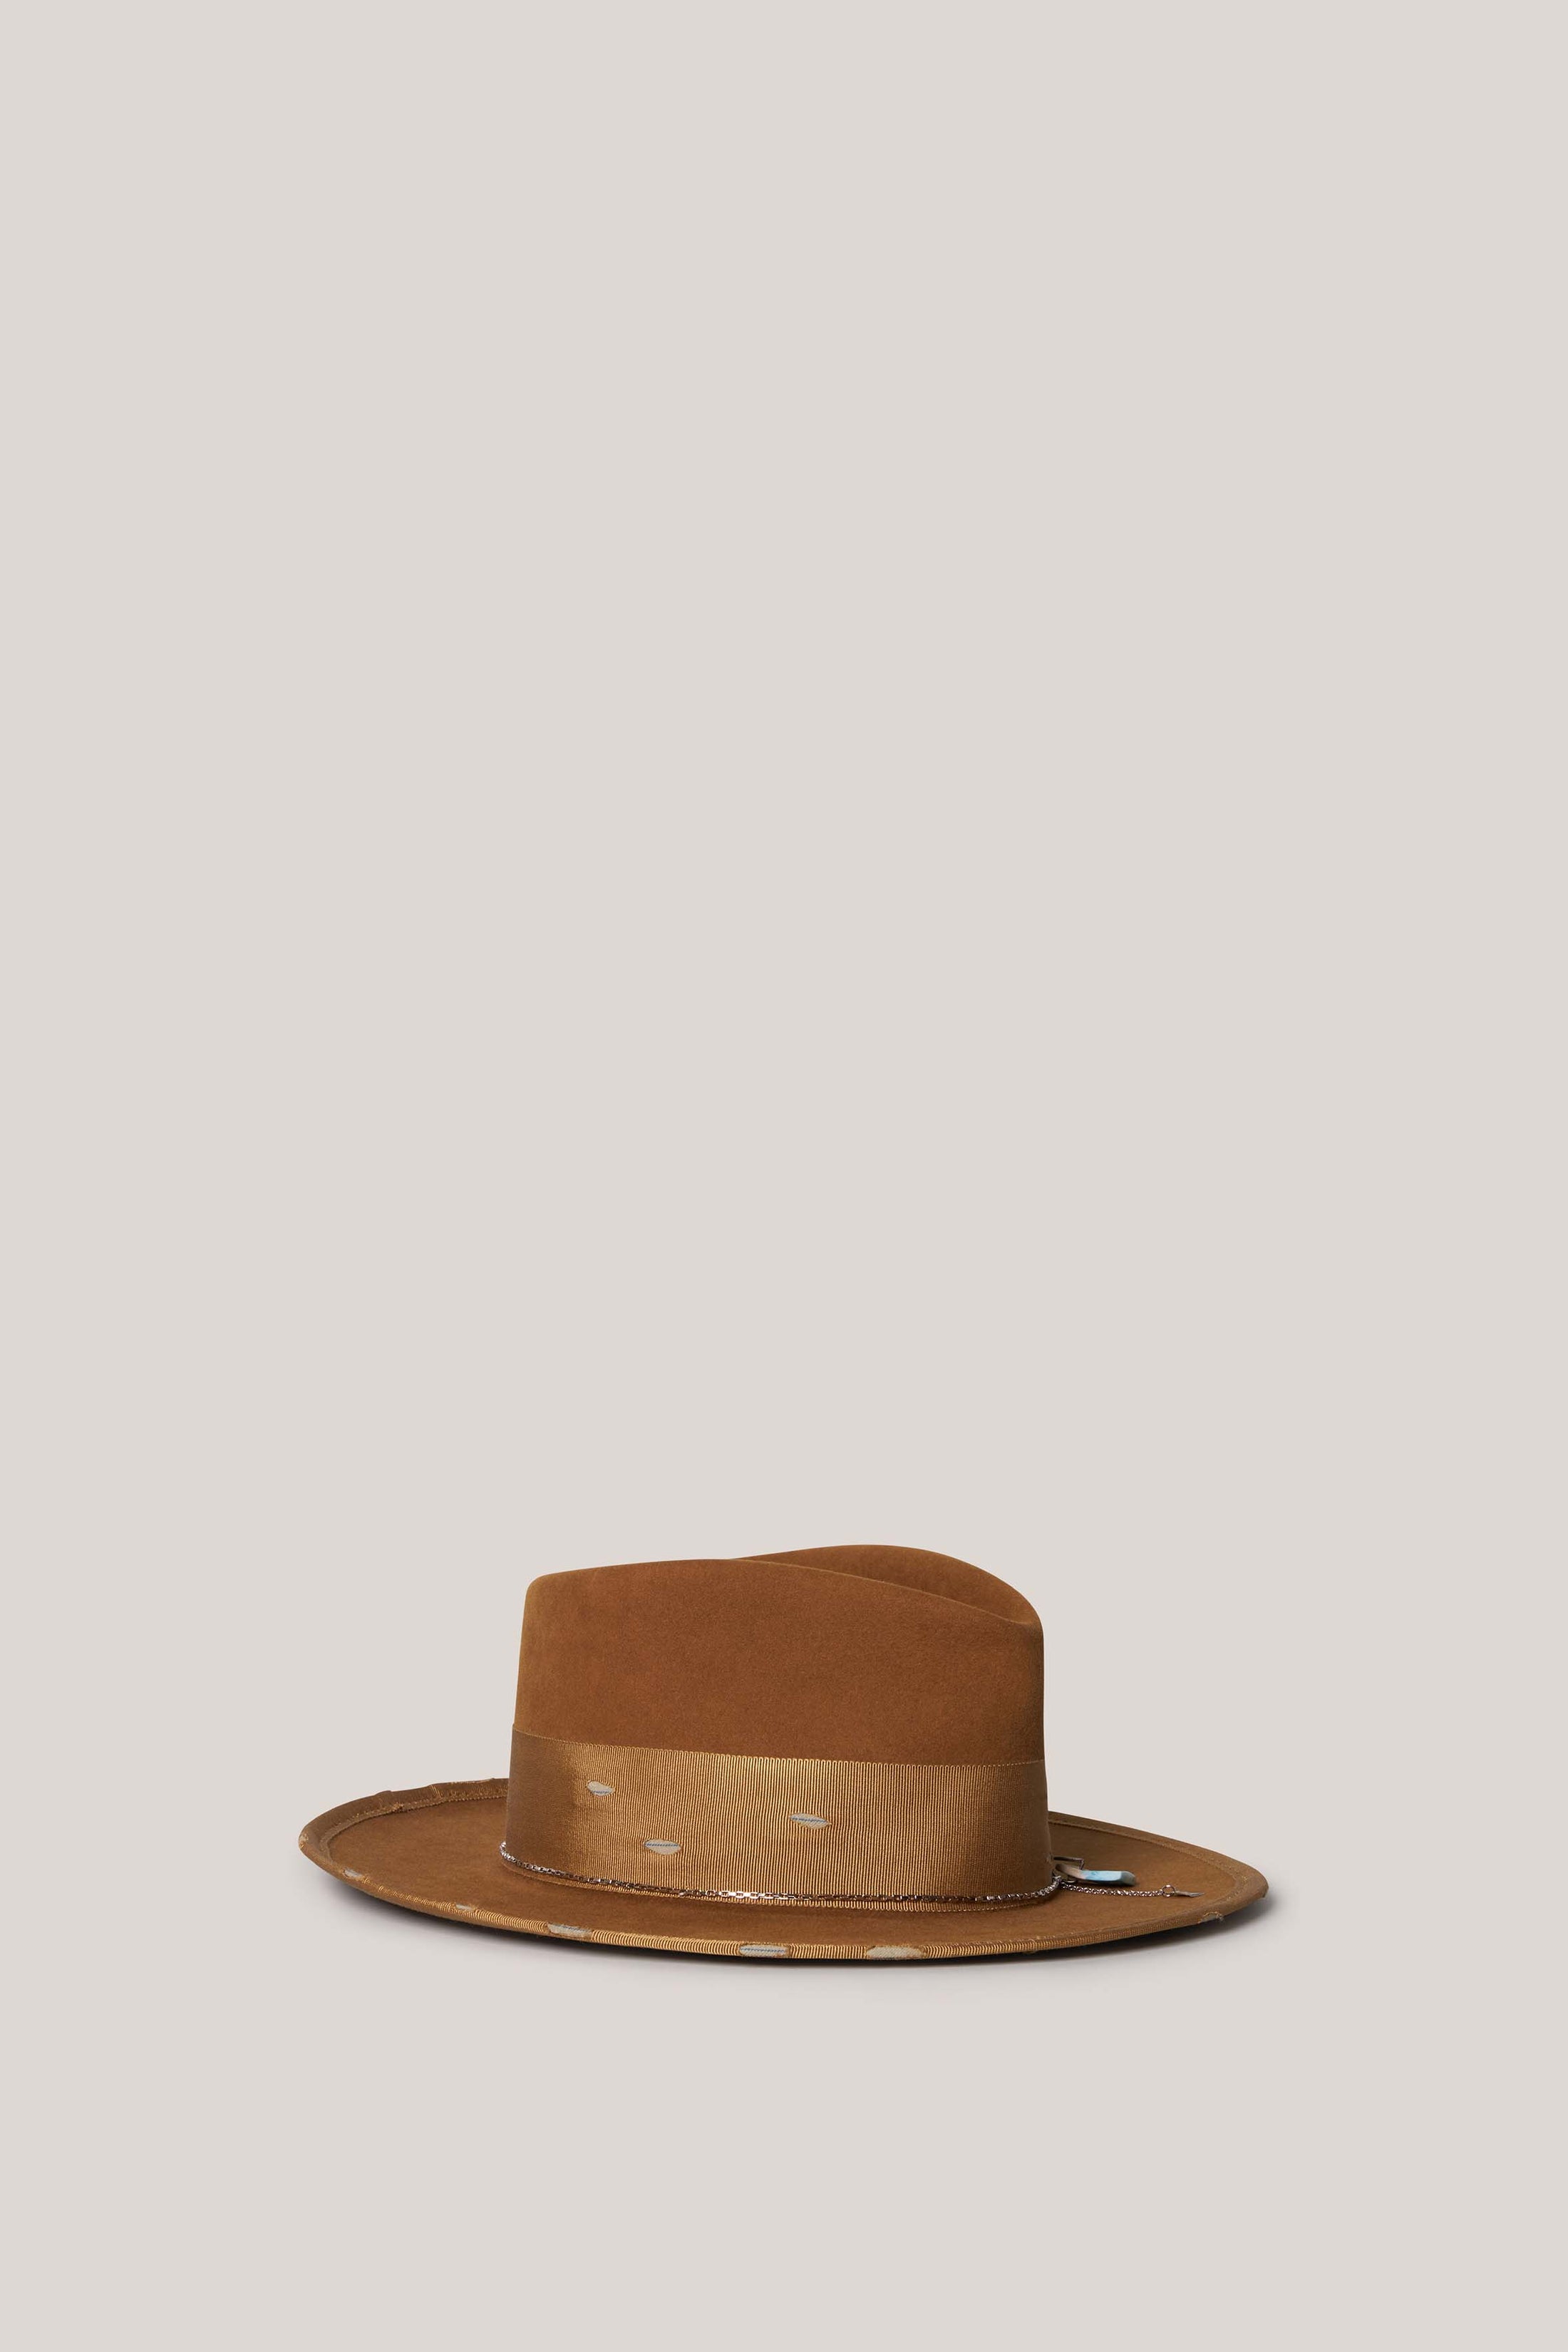 Cote Sauvage Hat